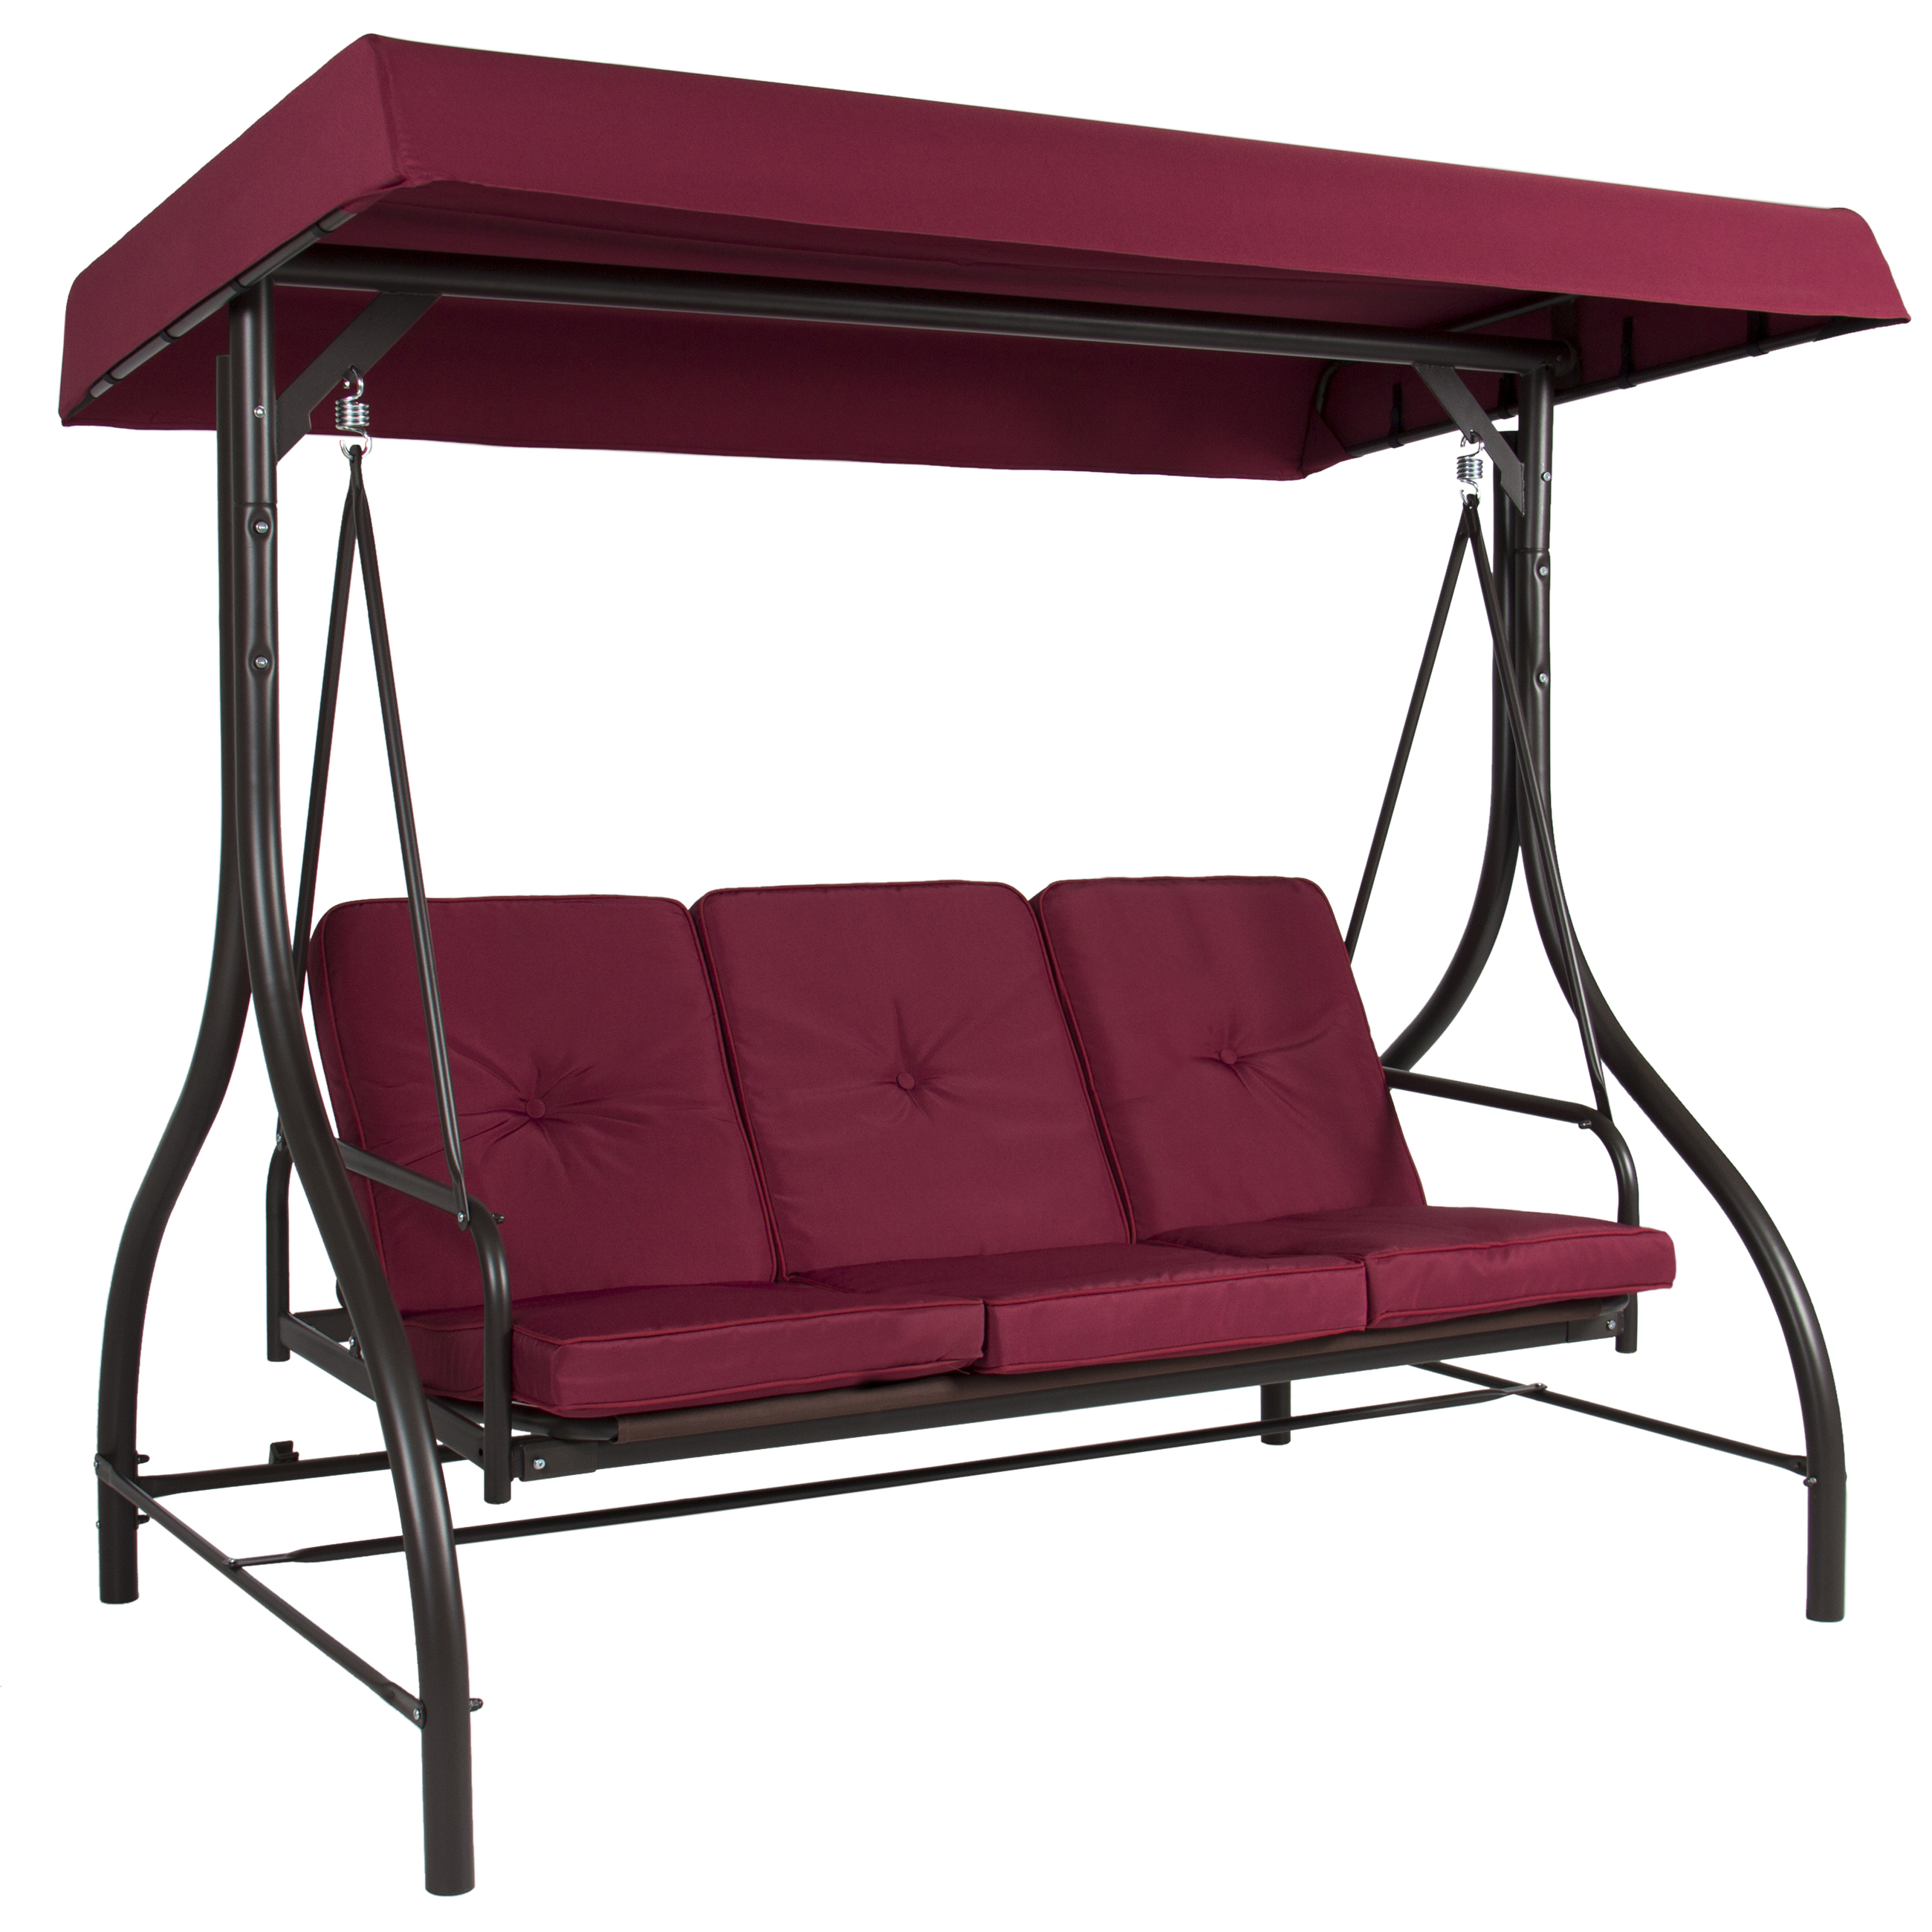 Luxury Converting Outdoor Swing Canopy Hammock Seats 3 Patio Deck Furniture  Burgundy patio swing canopy